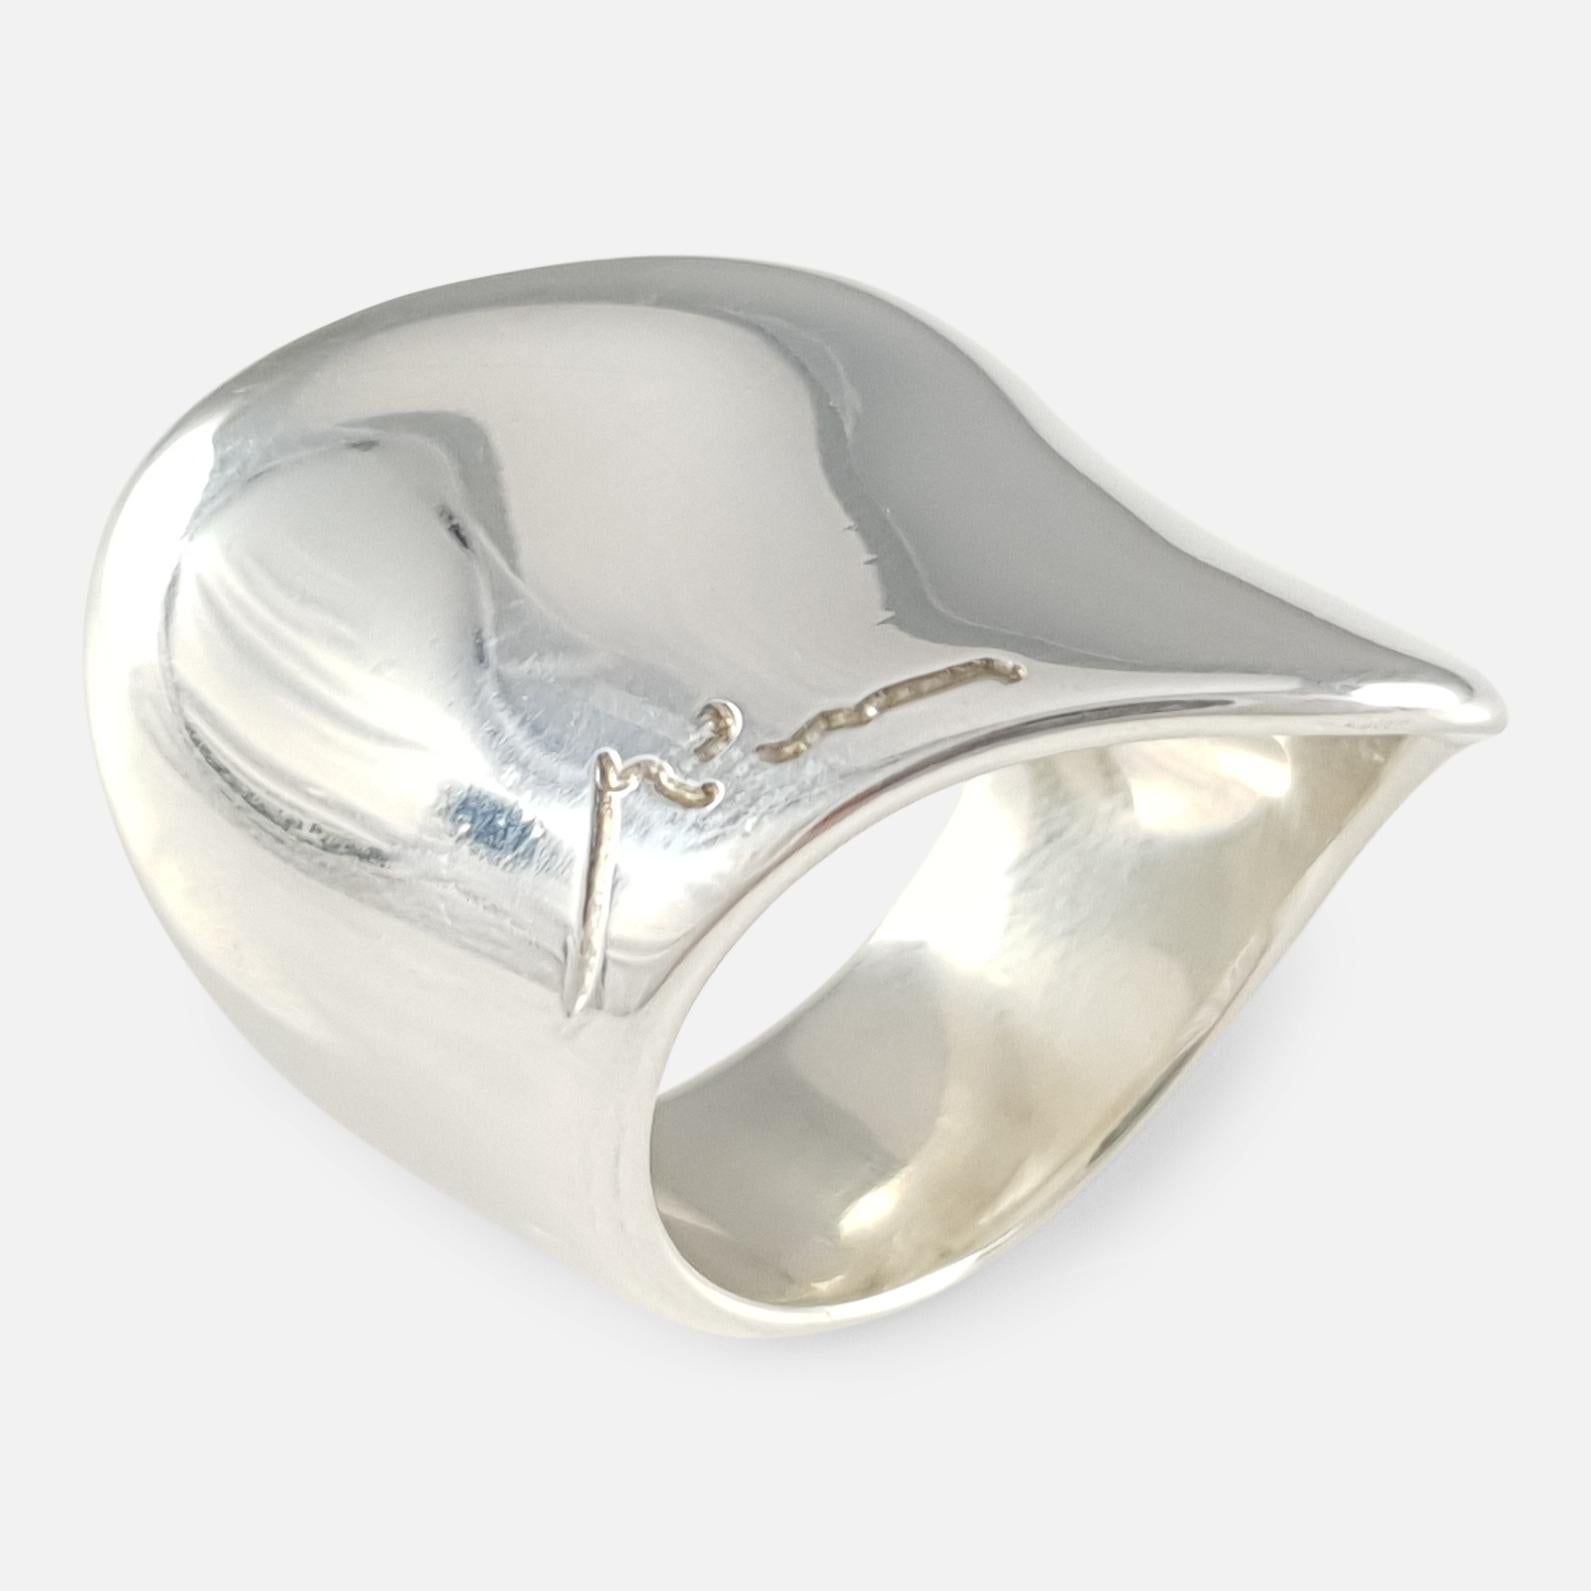 Georg Jensen Danish Sterling Silver Modernist Ring #257 by Minas Spiridis 4